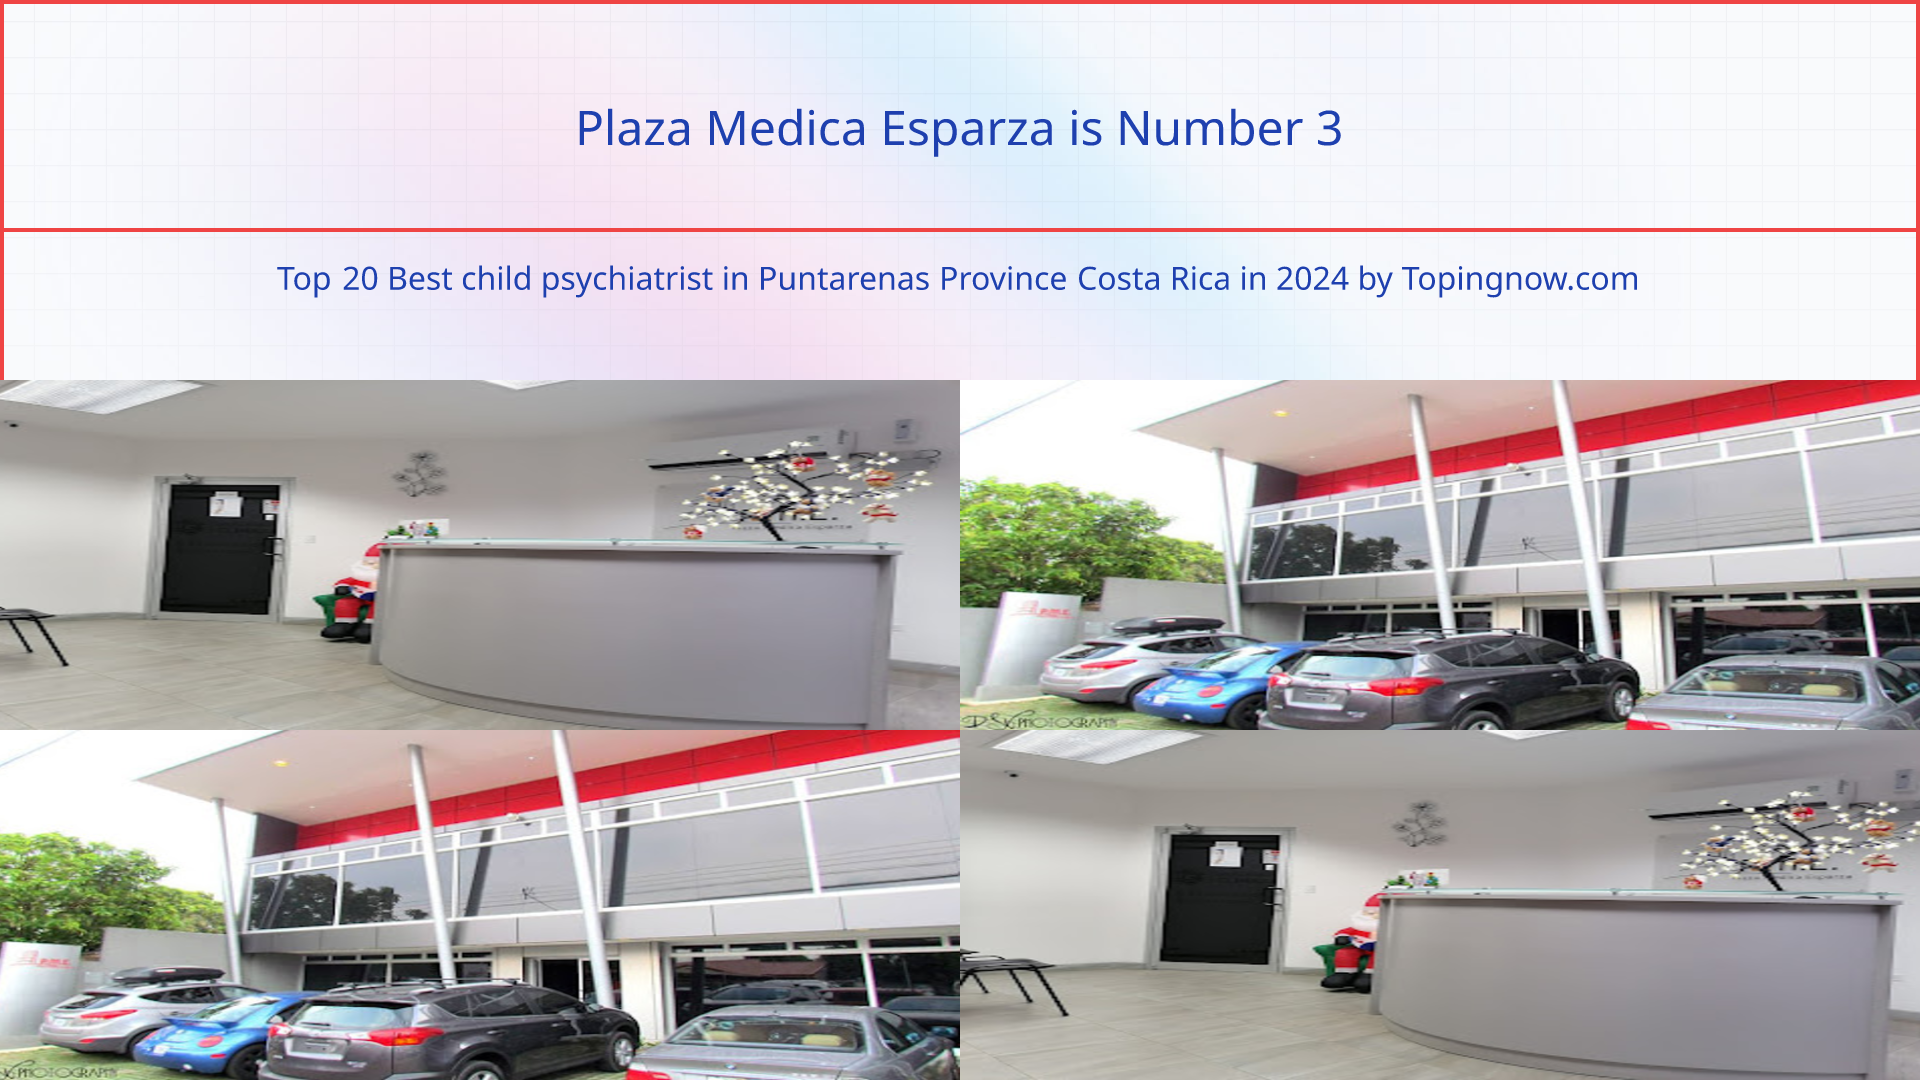 Plaza Medica Esparza: Top 20 Best child psychiatrist in Puntarenas Province Costa Rica in 2024